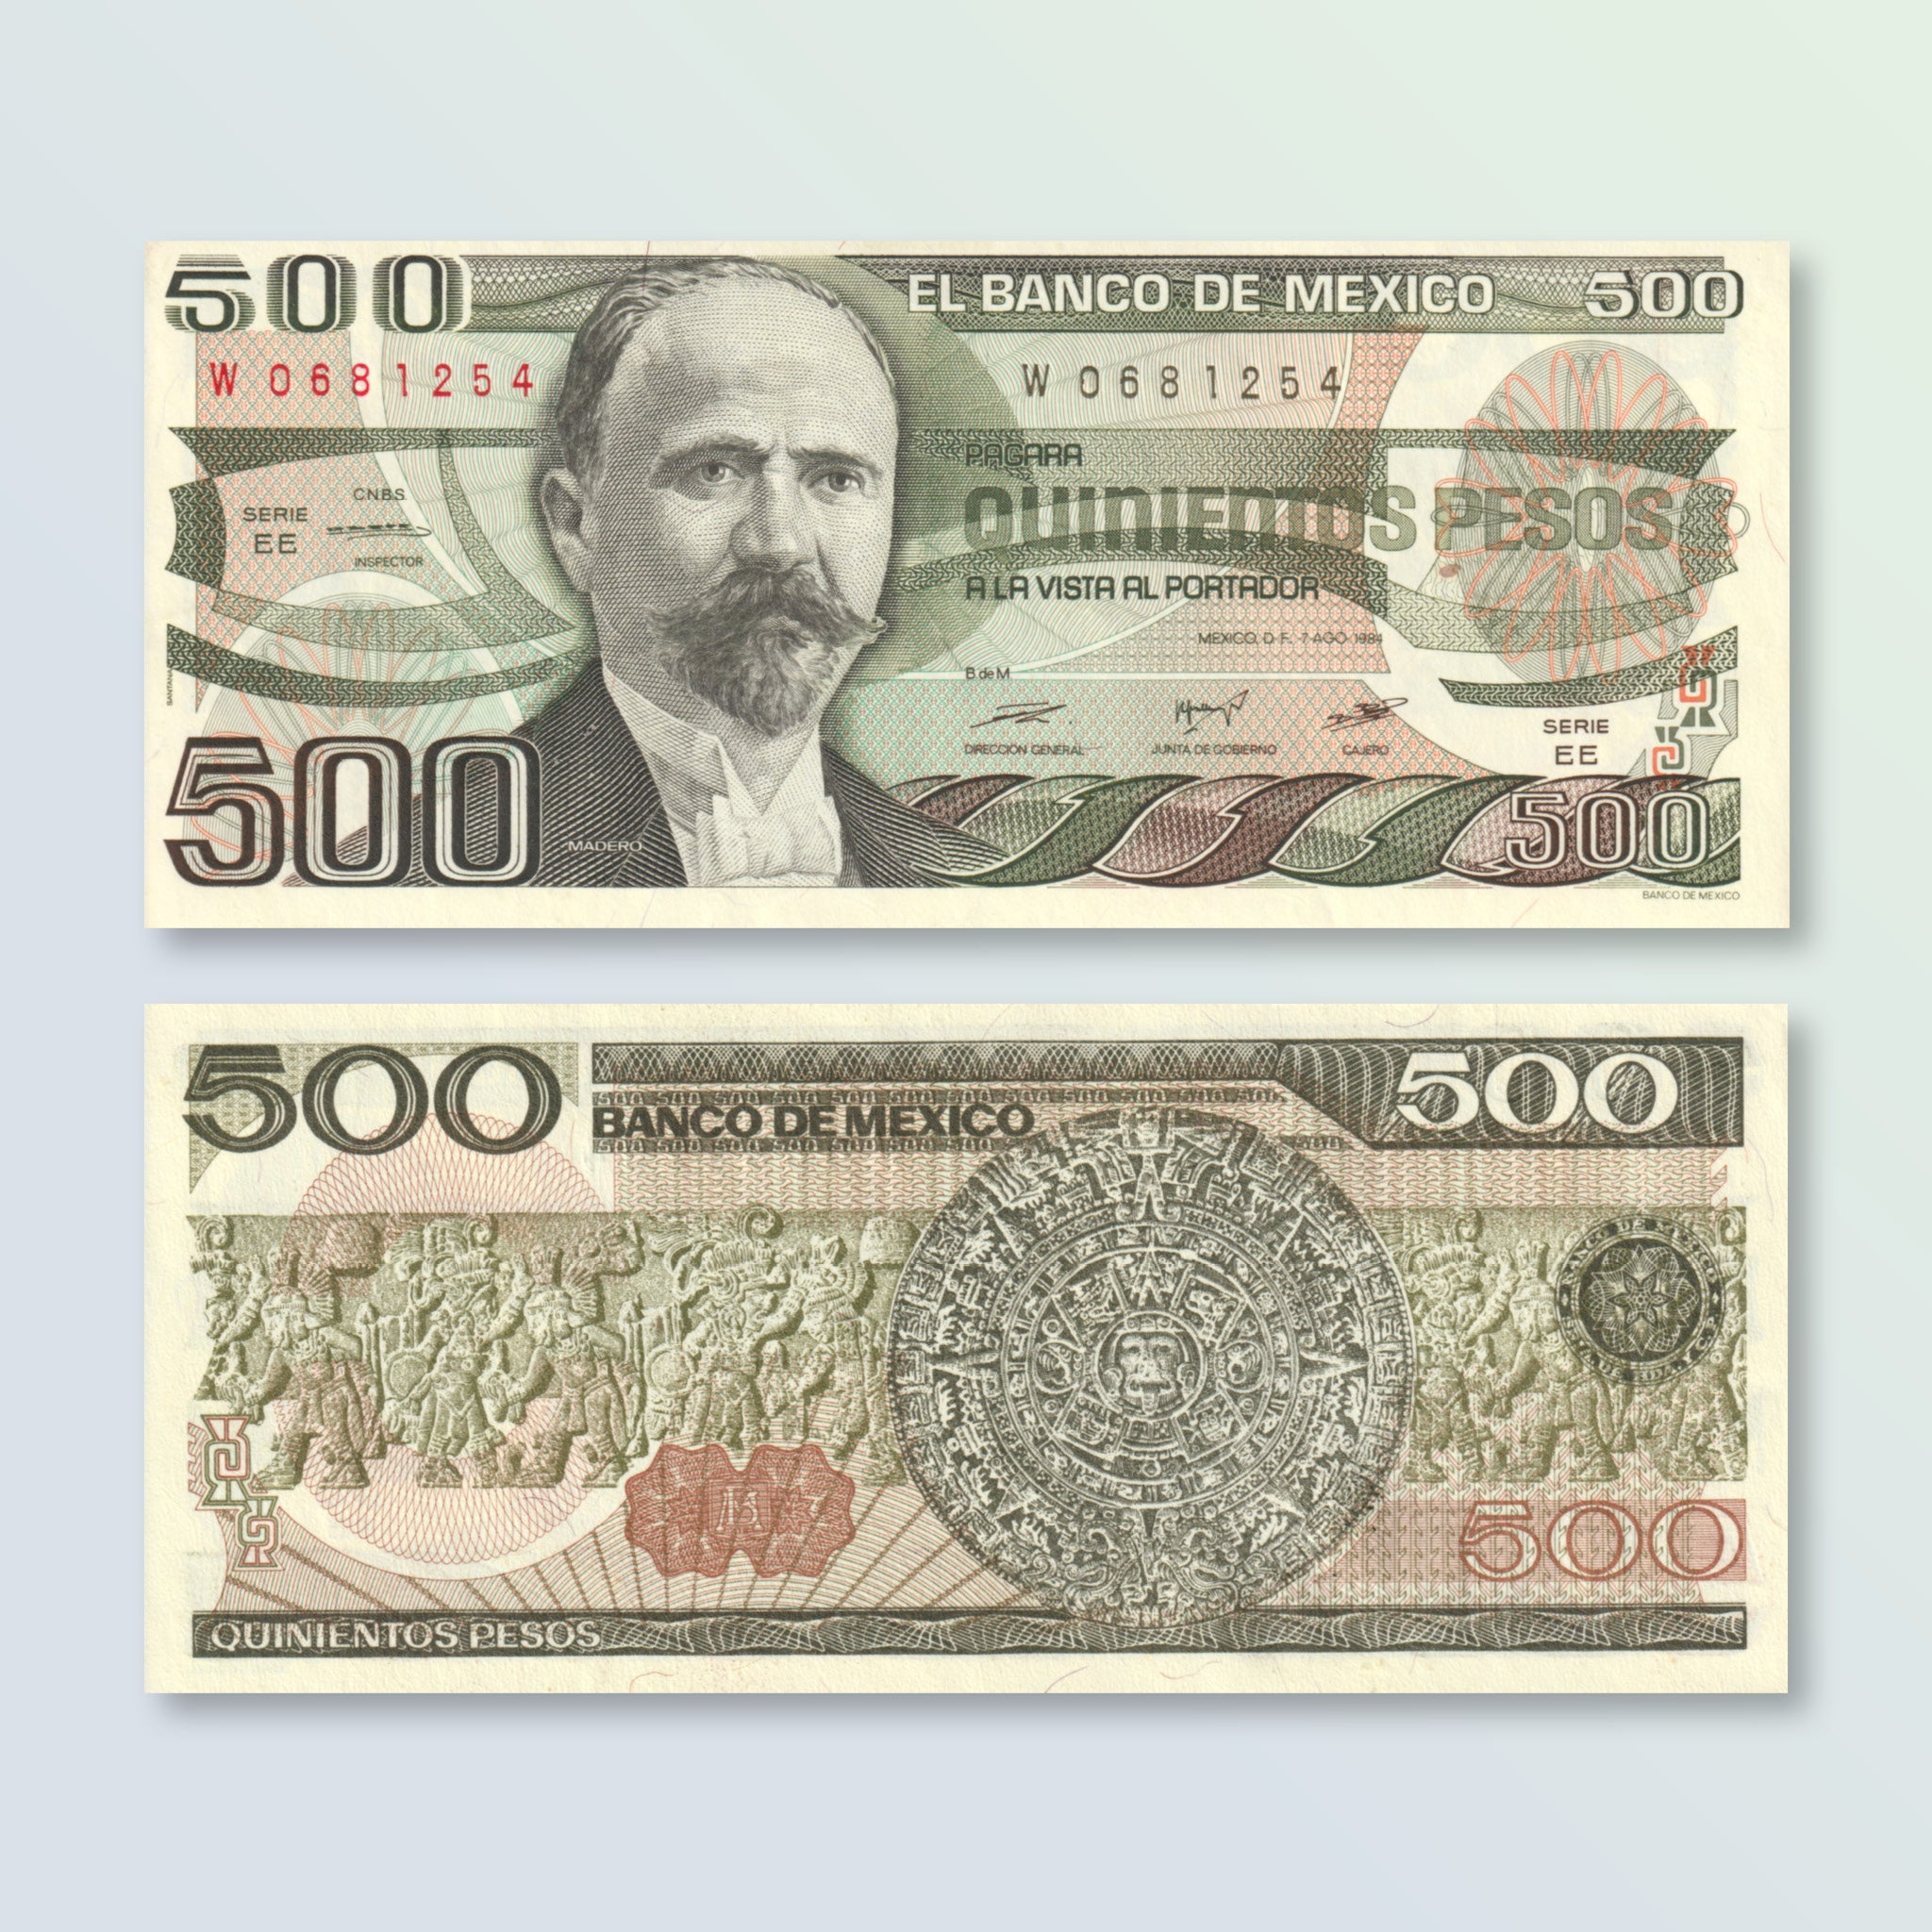 Mexico 500 Pesos, 1984, B653b, P79b, UNC - Robert's World Money - World Banknotes